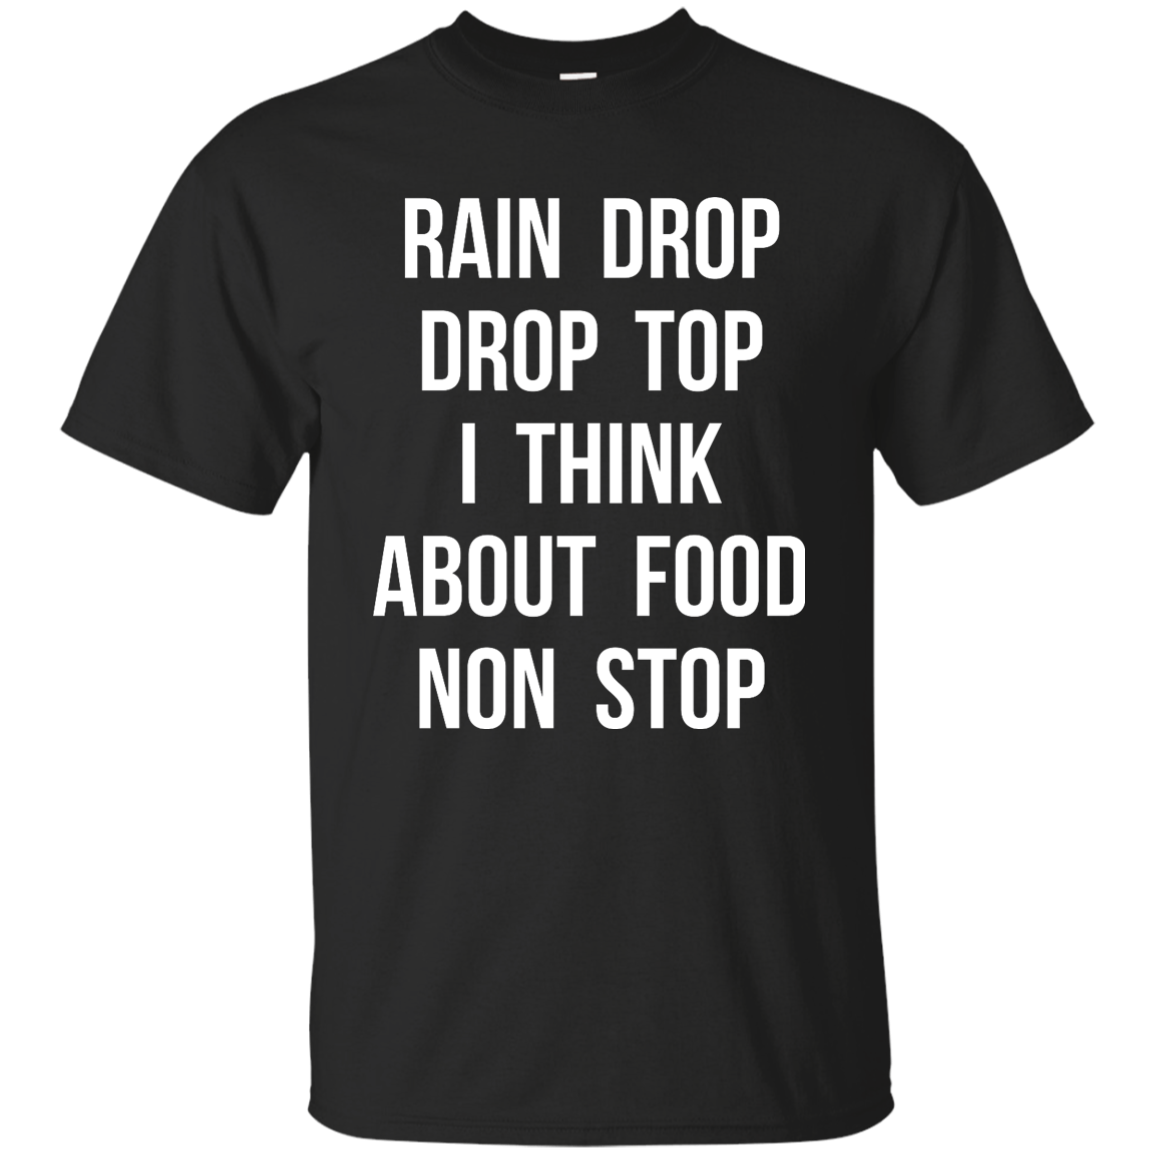 Rain Drop Drop Top I Think about Food non Stop shirt